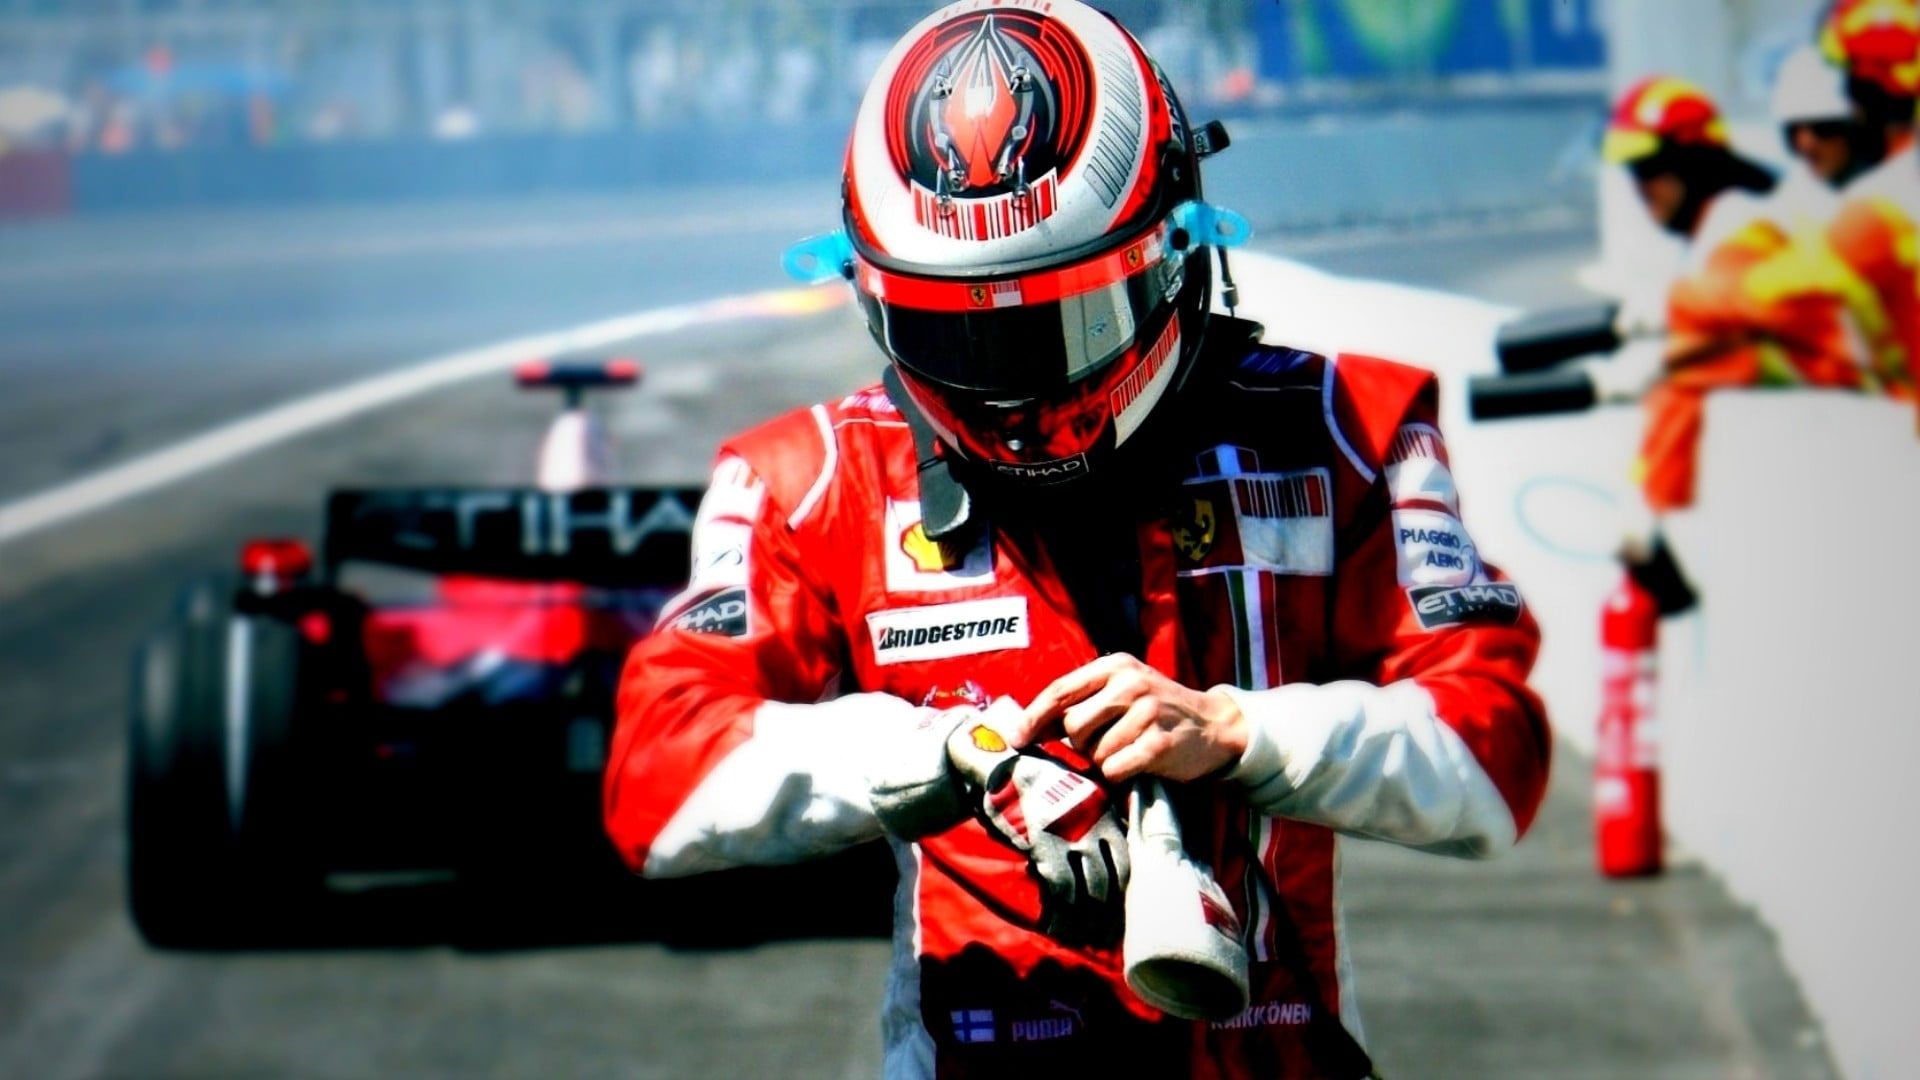 Wallpaper Man In F1 Car Suit And Helmet, Formula 1, F1, Cars & Motos